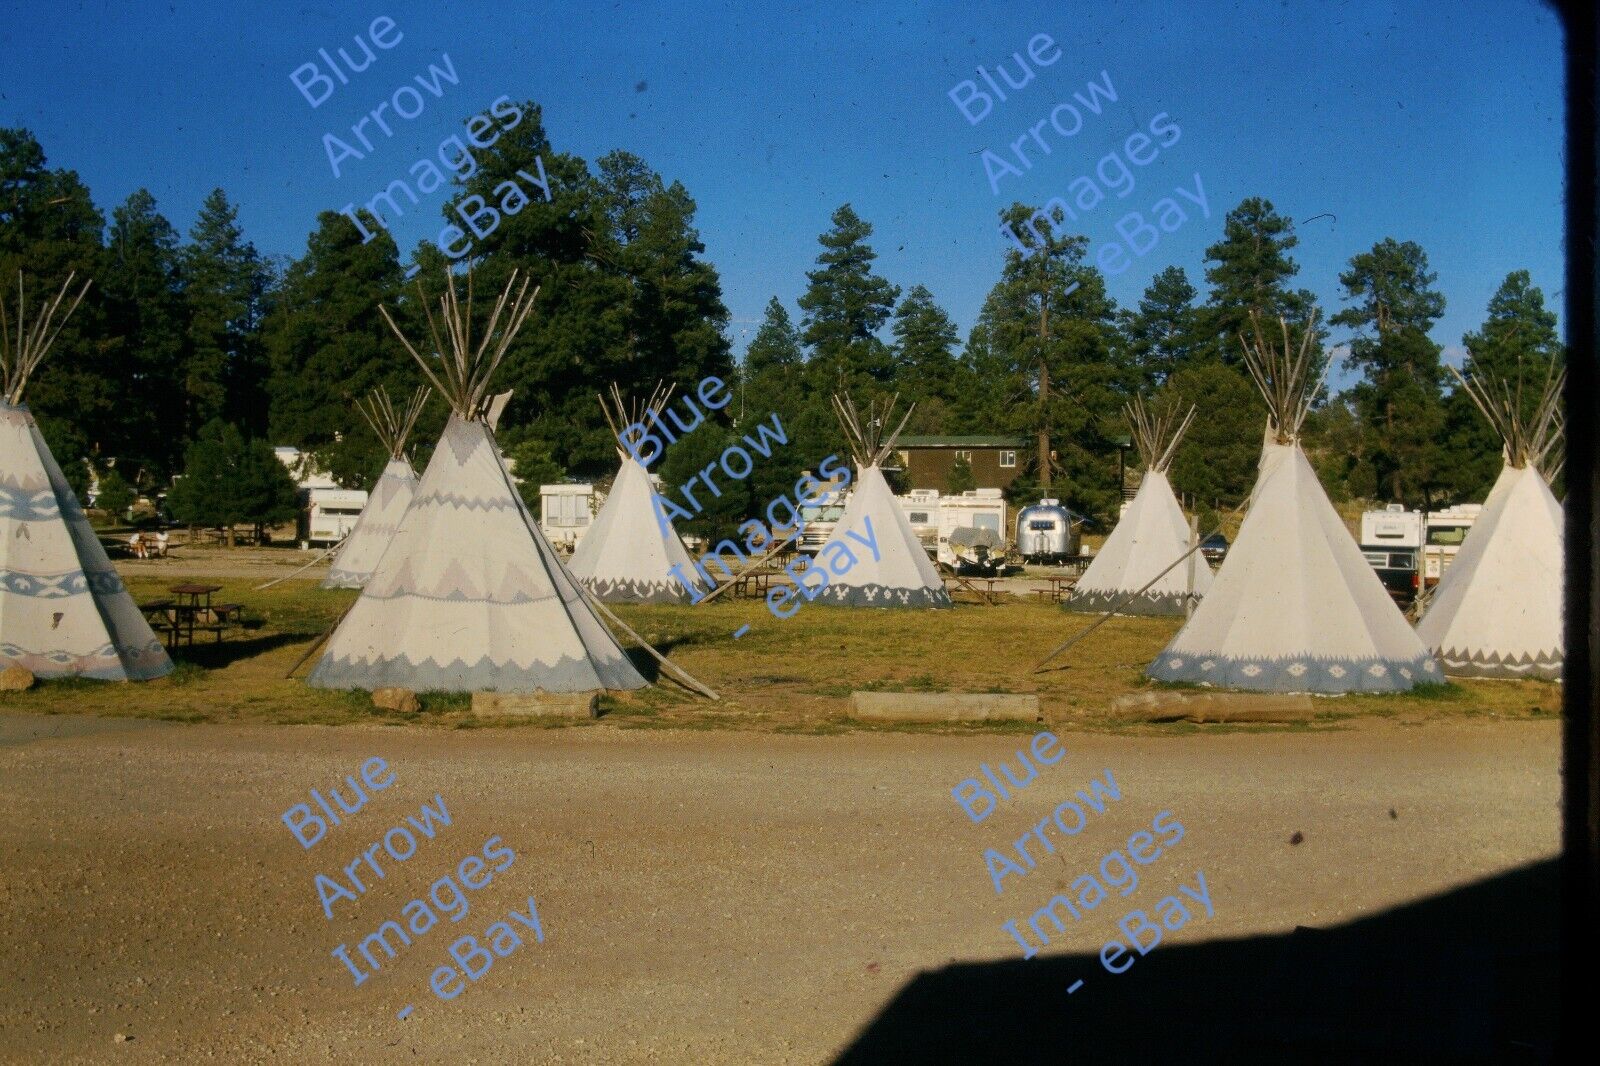 1986 35mm slide Arizona Indian Teepee Campground Camping Resort #1826